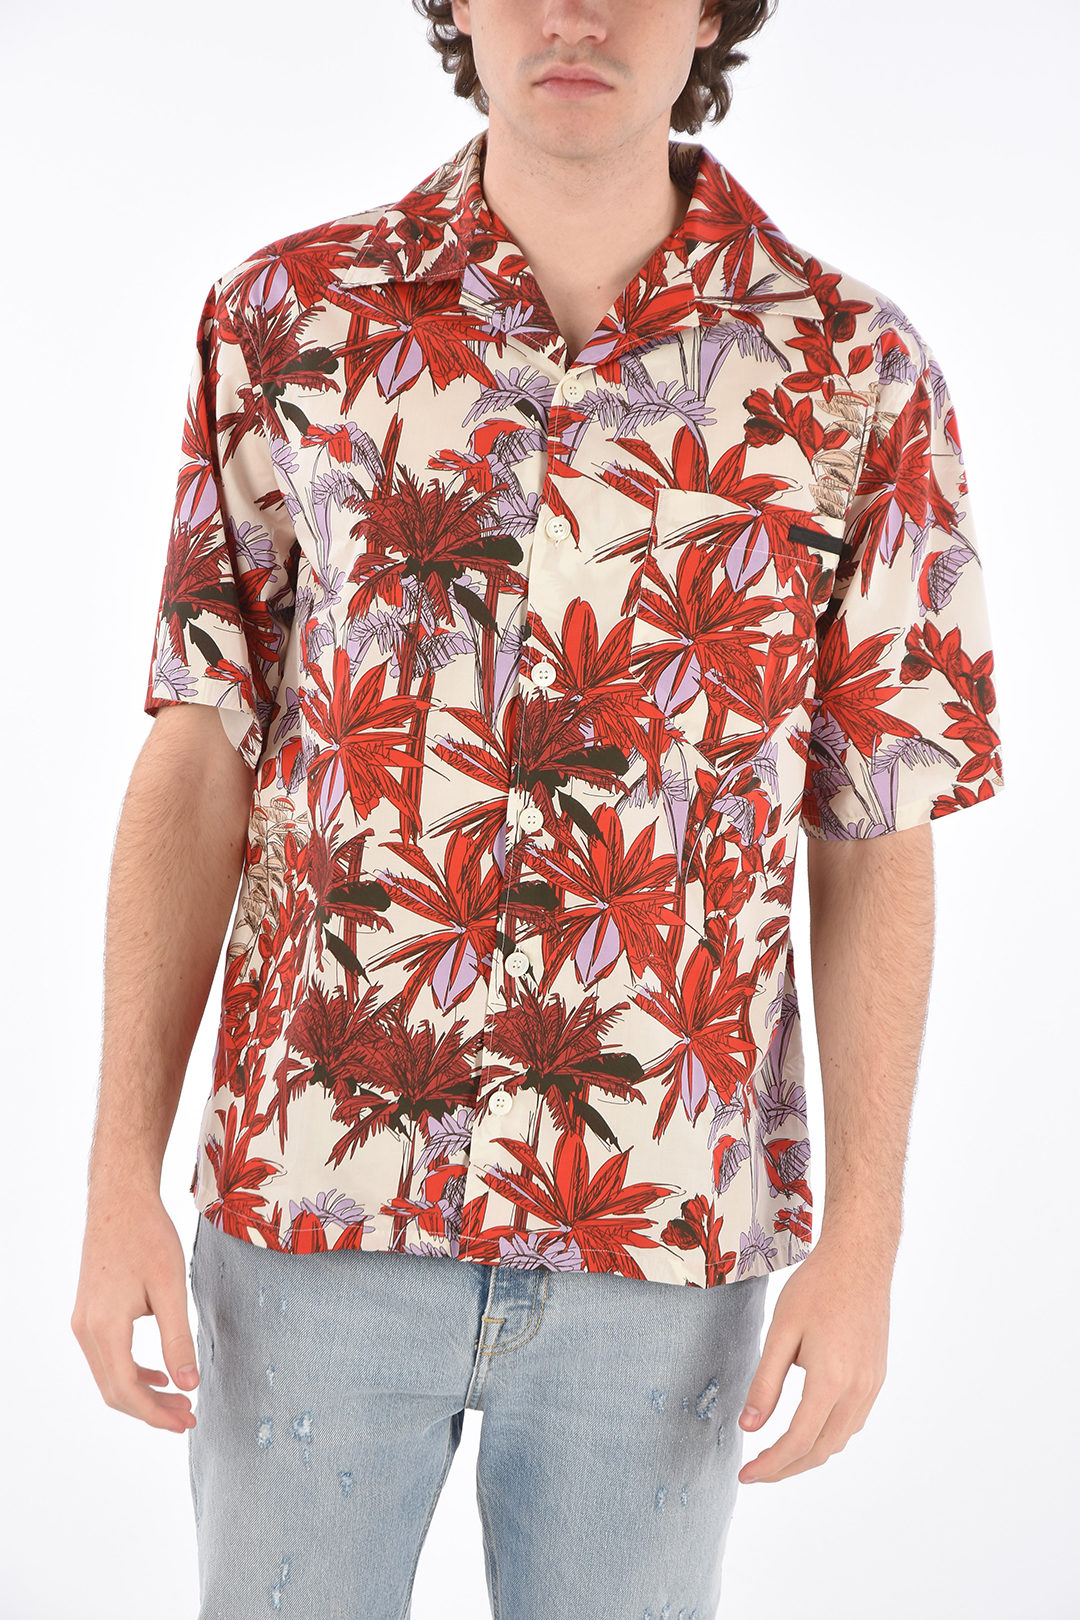 Prada floral-print shirt with breast pocket men - Glamood Outlet